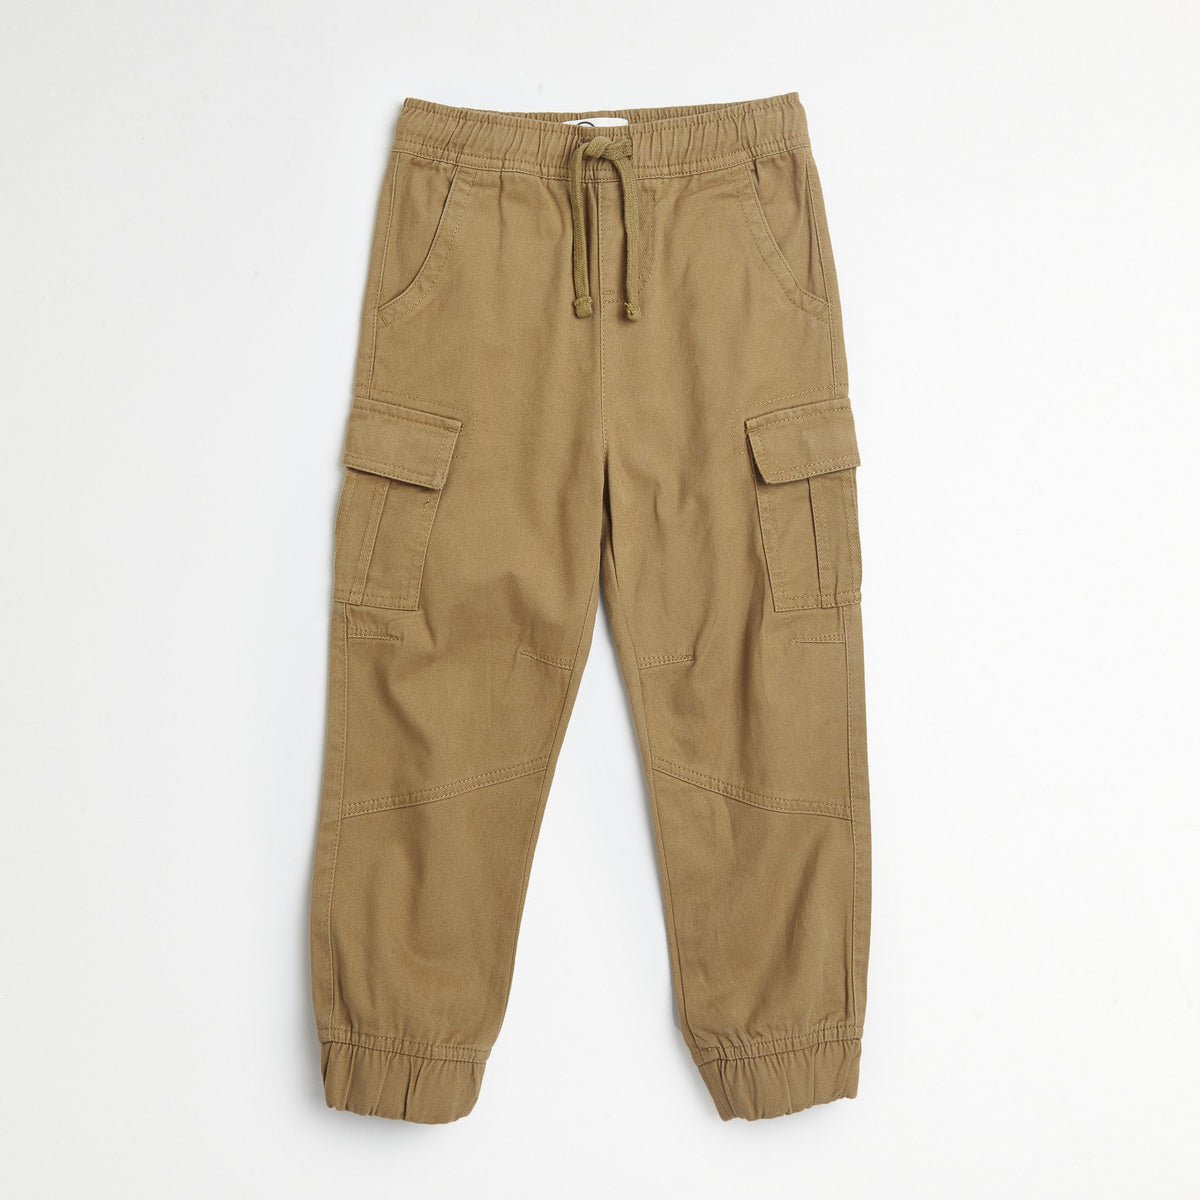 Boys Khaki Pants With Cargo Pockets, Sizes S (8), M (10/12), L (14/16 ...